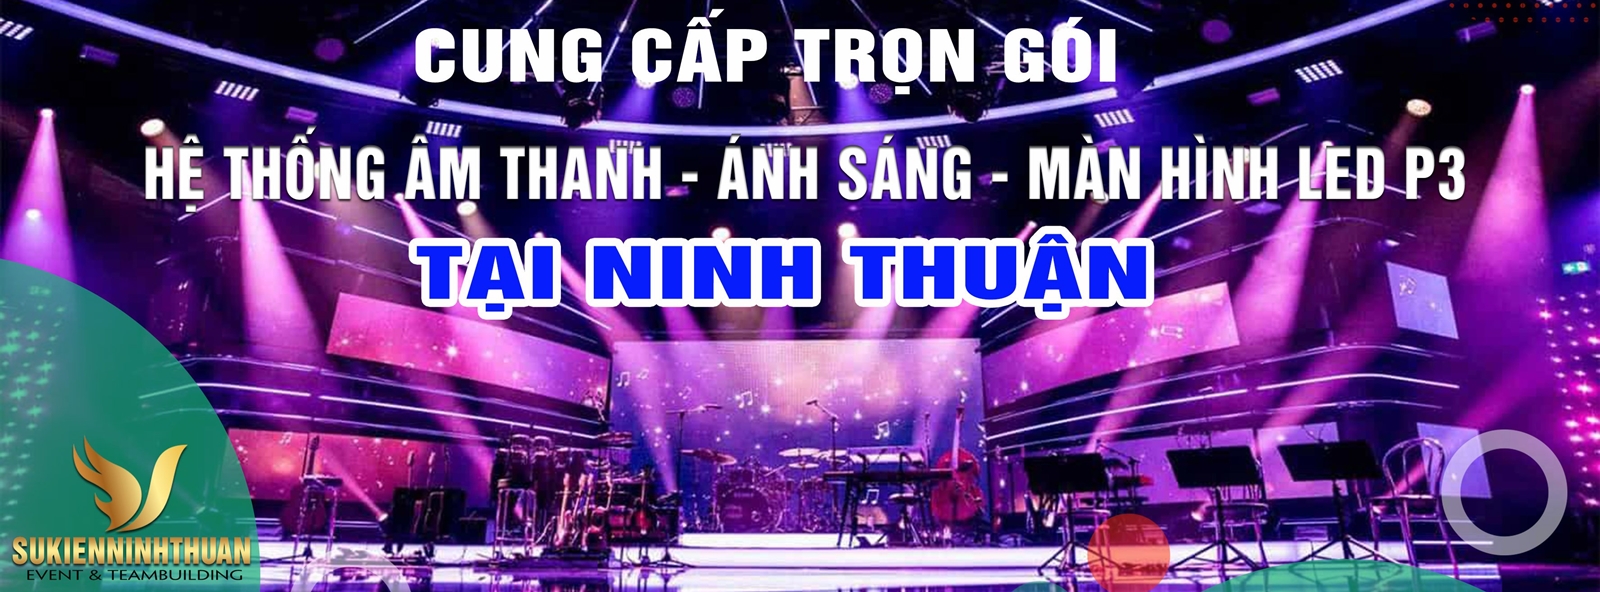 cung-cap-tron-goi-he-thong-am-thanh-anh-sang-man-hinh-led-p3